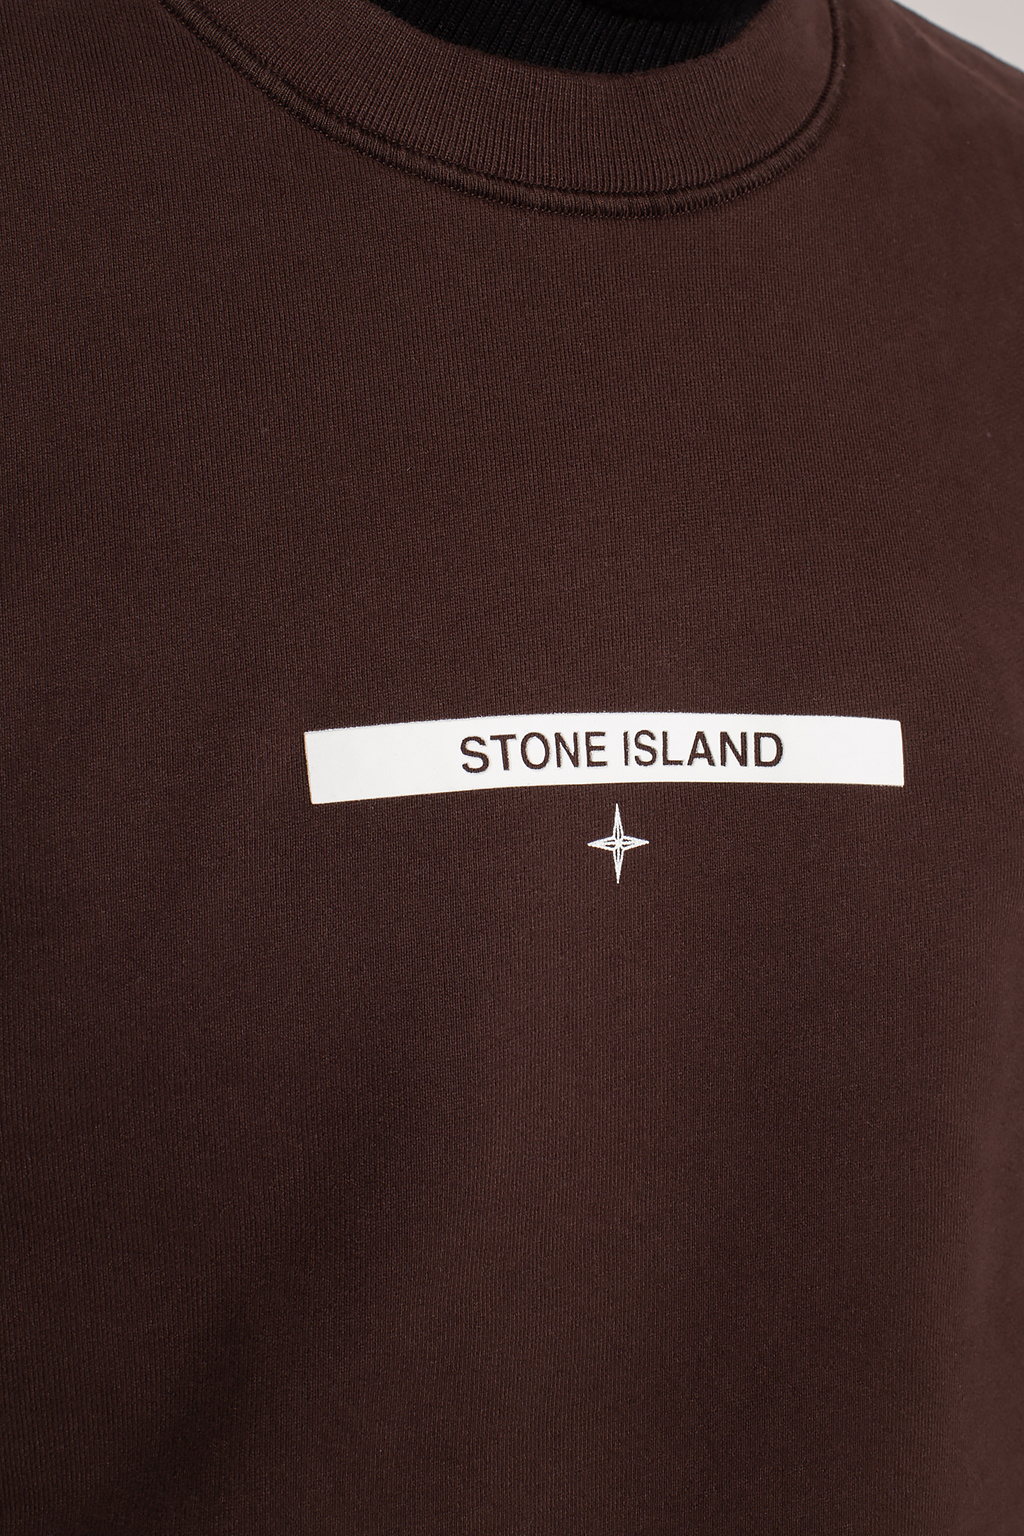 Stone Island Portugal Home Shirt 2020